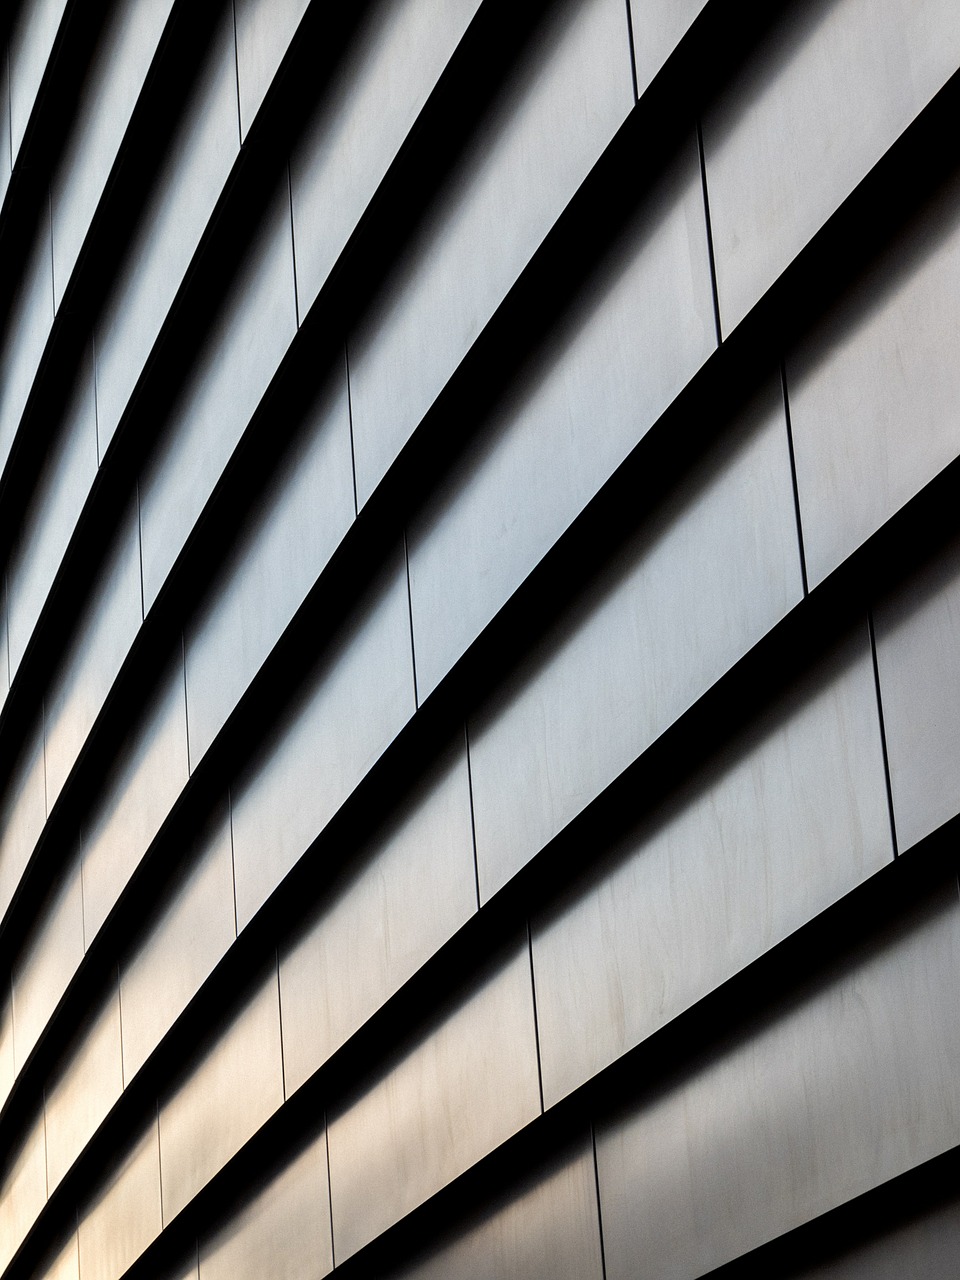 Architecture patterns. Серебристые линии на стене. Линии на фасаде. Паттерны в архитектуре. Однотонный фасад с линиями.